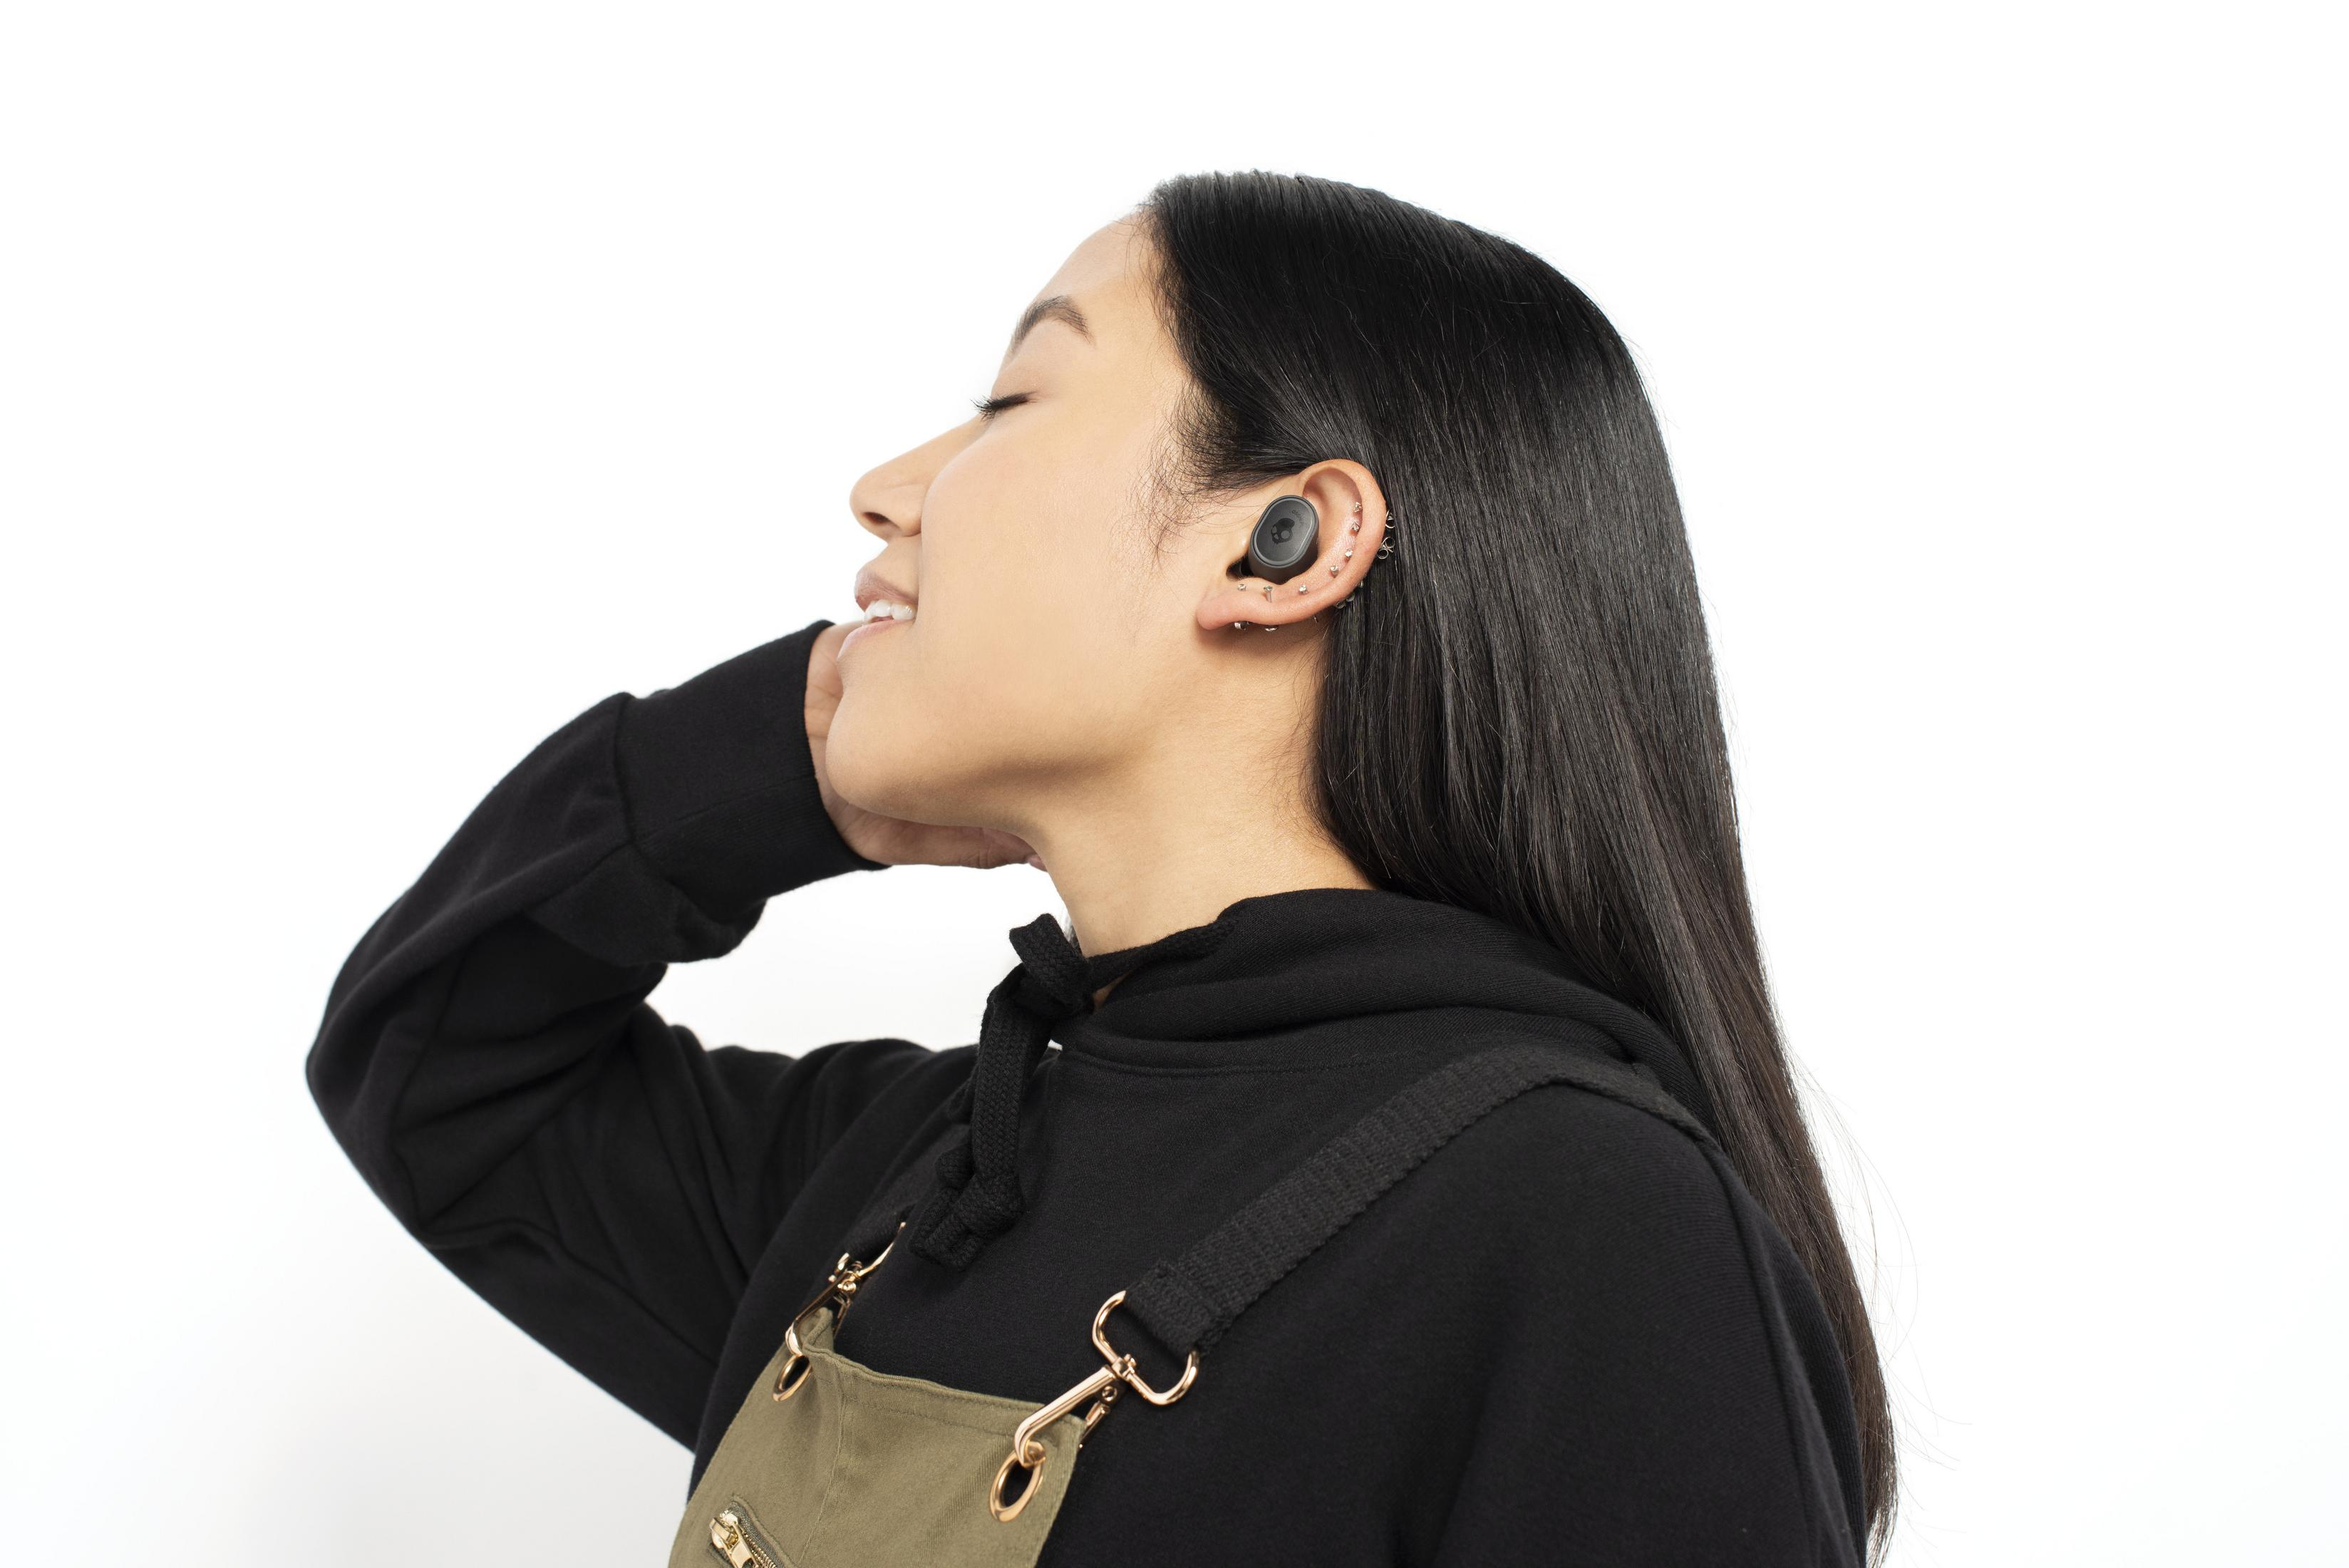 In-ear True EVO BLACK, Black TW Bluetooth SESH TRUE SKULLCANDY Kopfhörer S2TVW-N740